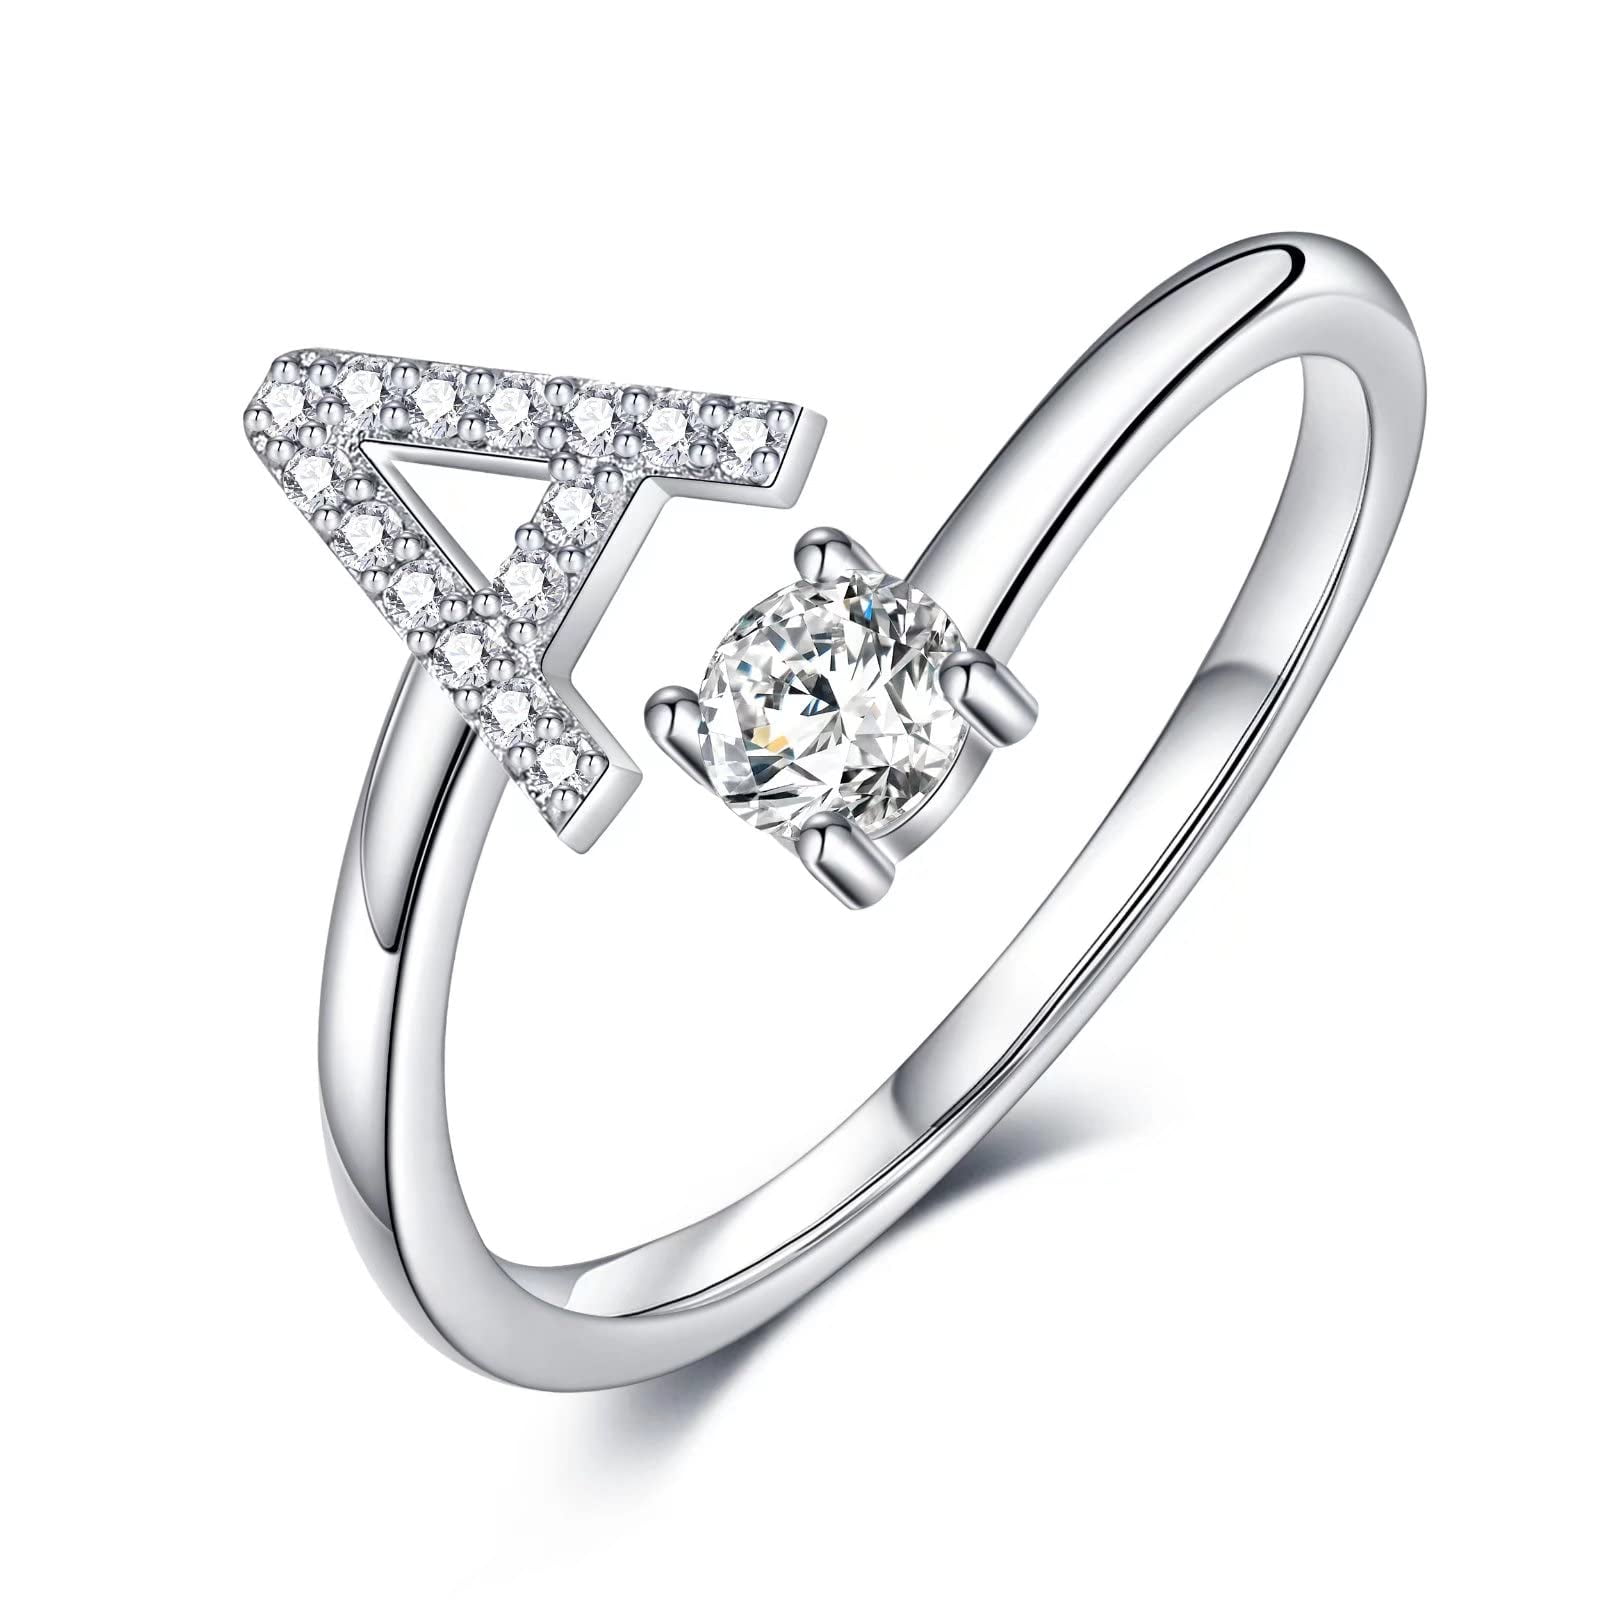 TANGPOET Moonstone Rings Penguin 925 Sterling Silver Ring for Women Girls  Adjustable Open Animal Rings Gifts 8# - Walmart.com